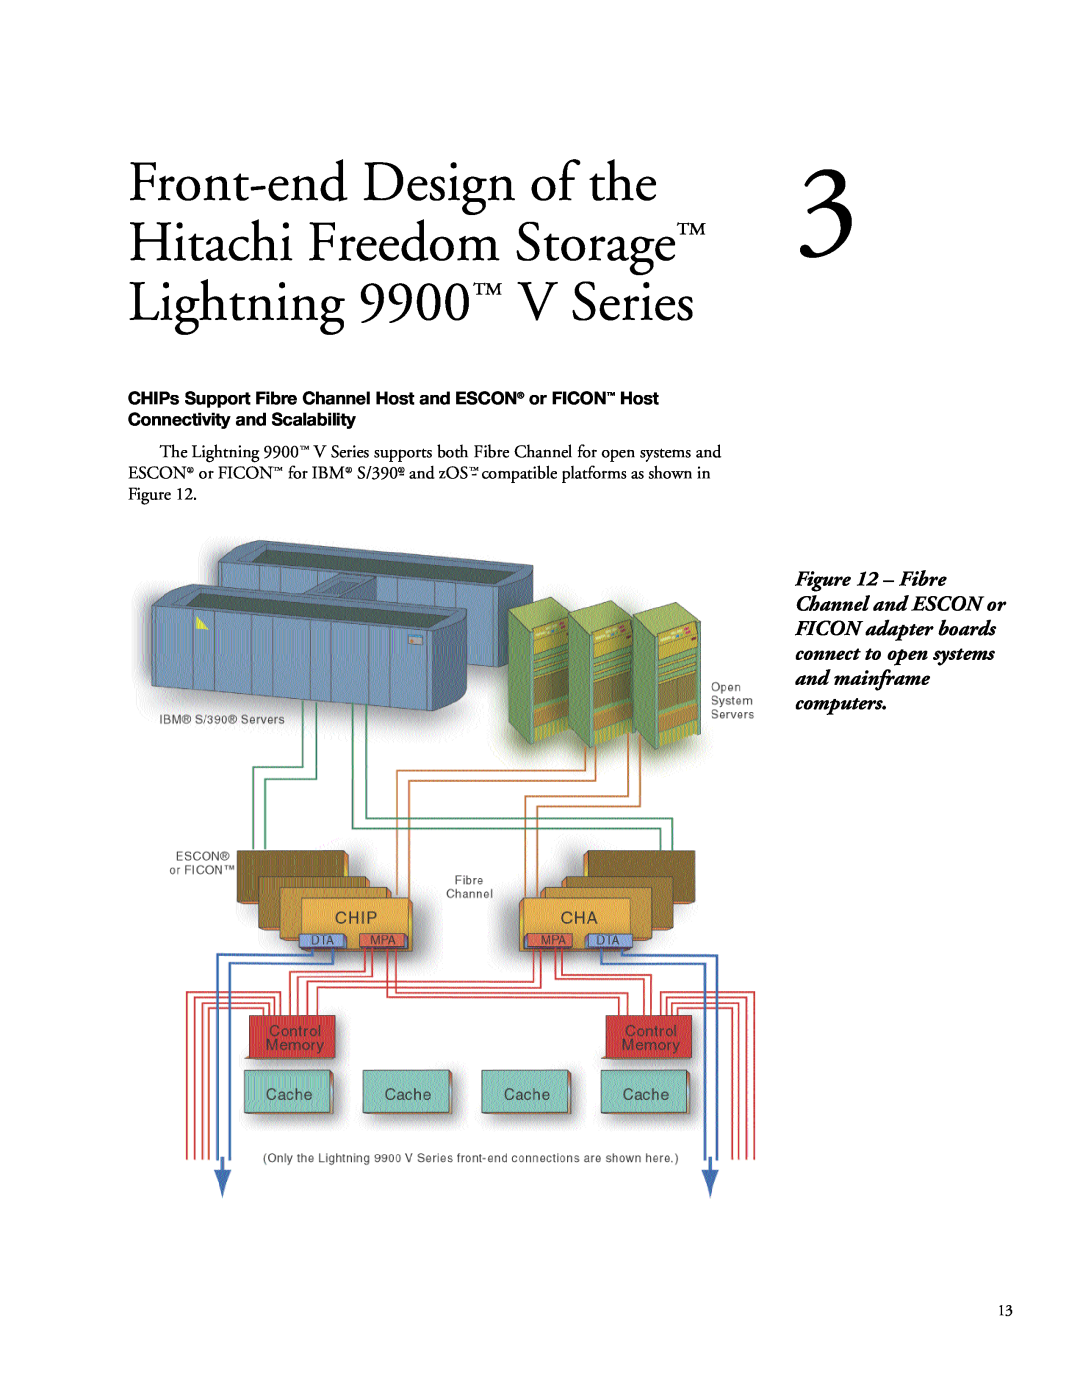 Hitachi manual Front-endDesign of the Hitachi Freedom Storage, Lightning 9900 V Series 